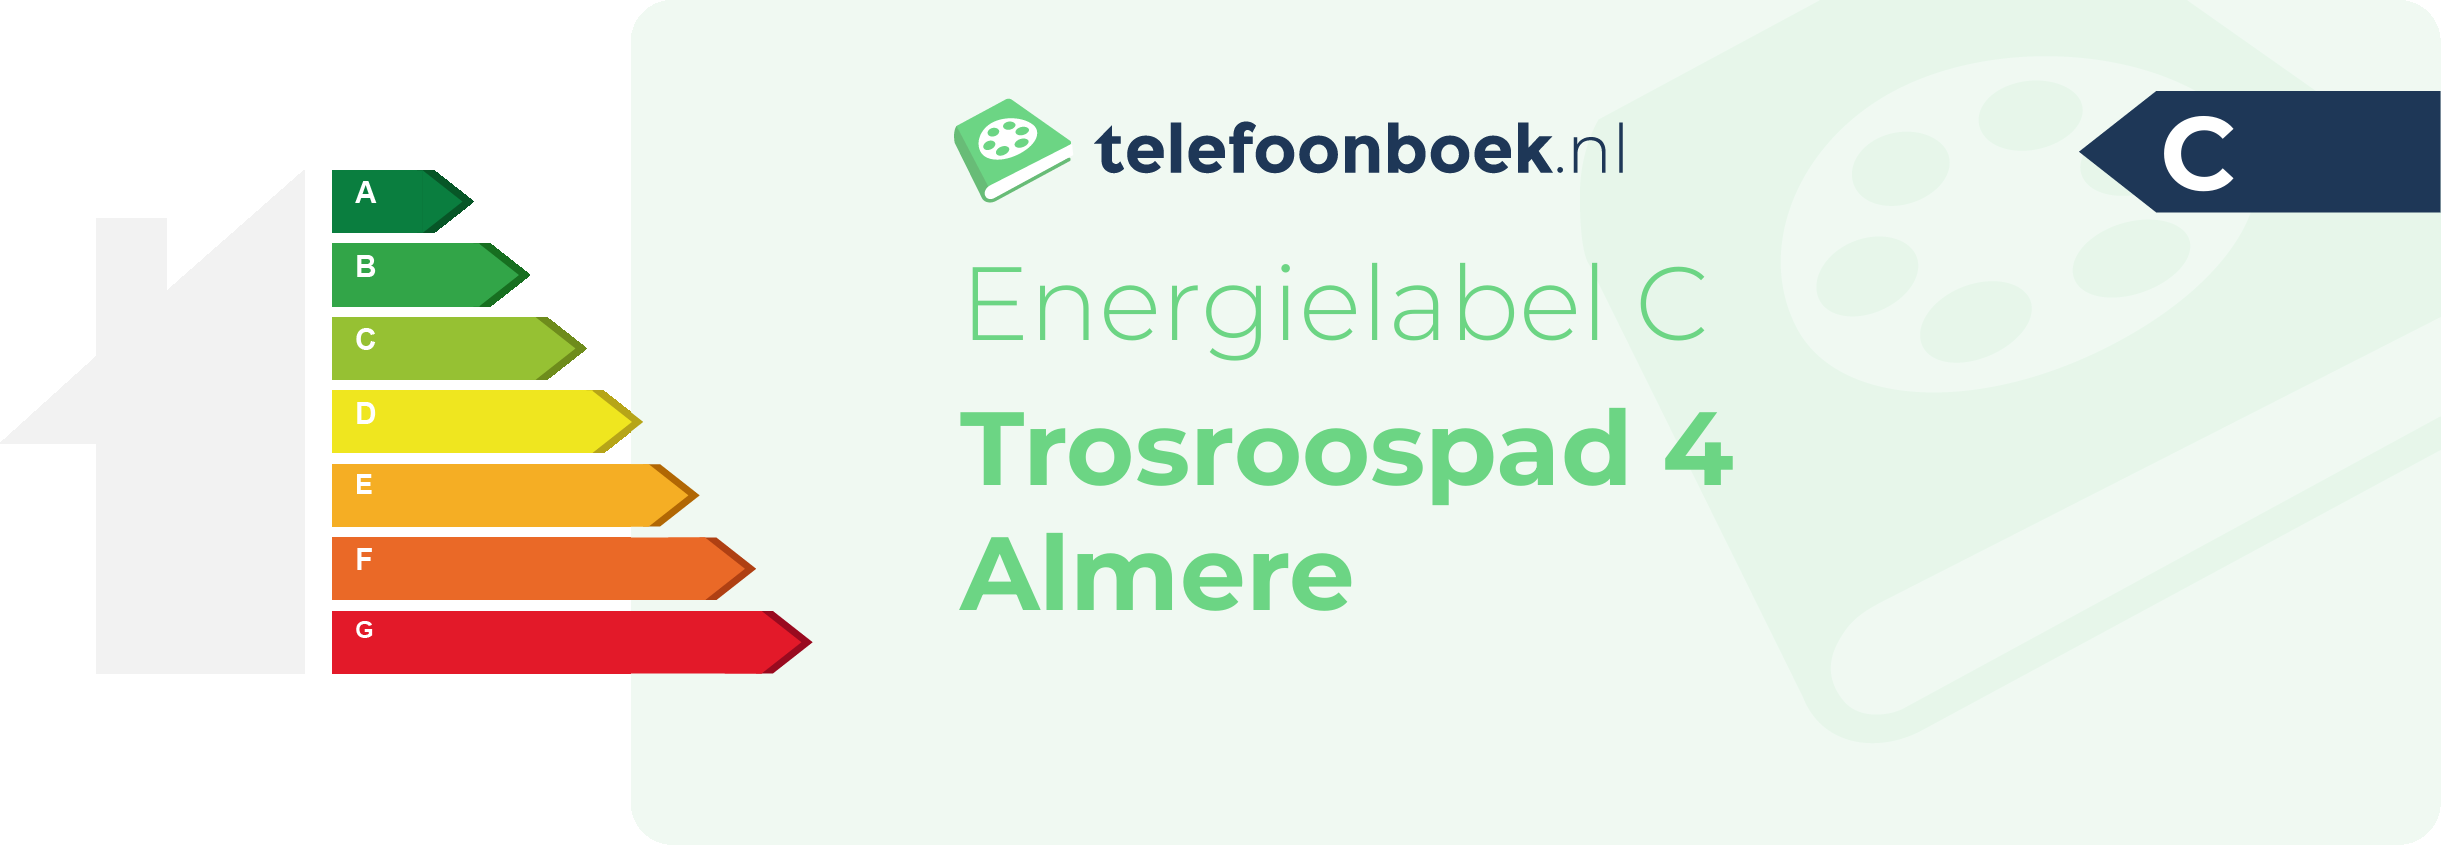 Energielabel Trosroospad 4 Almere